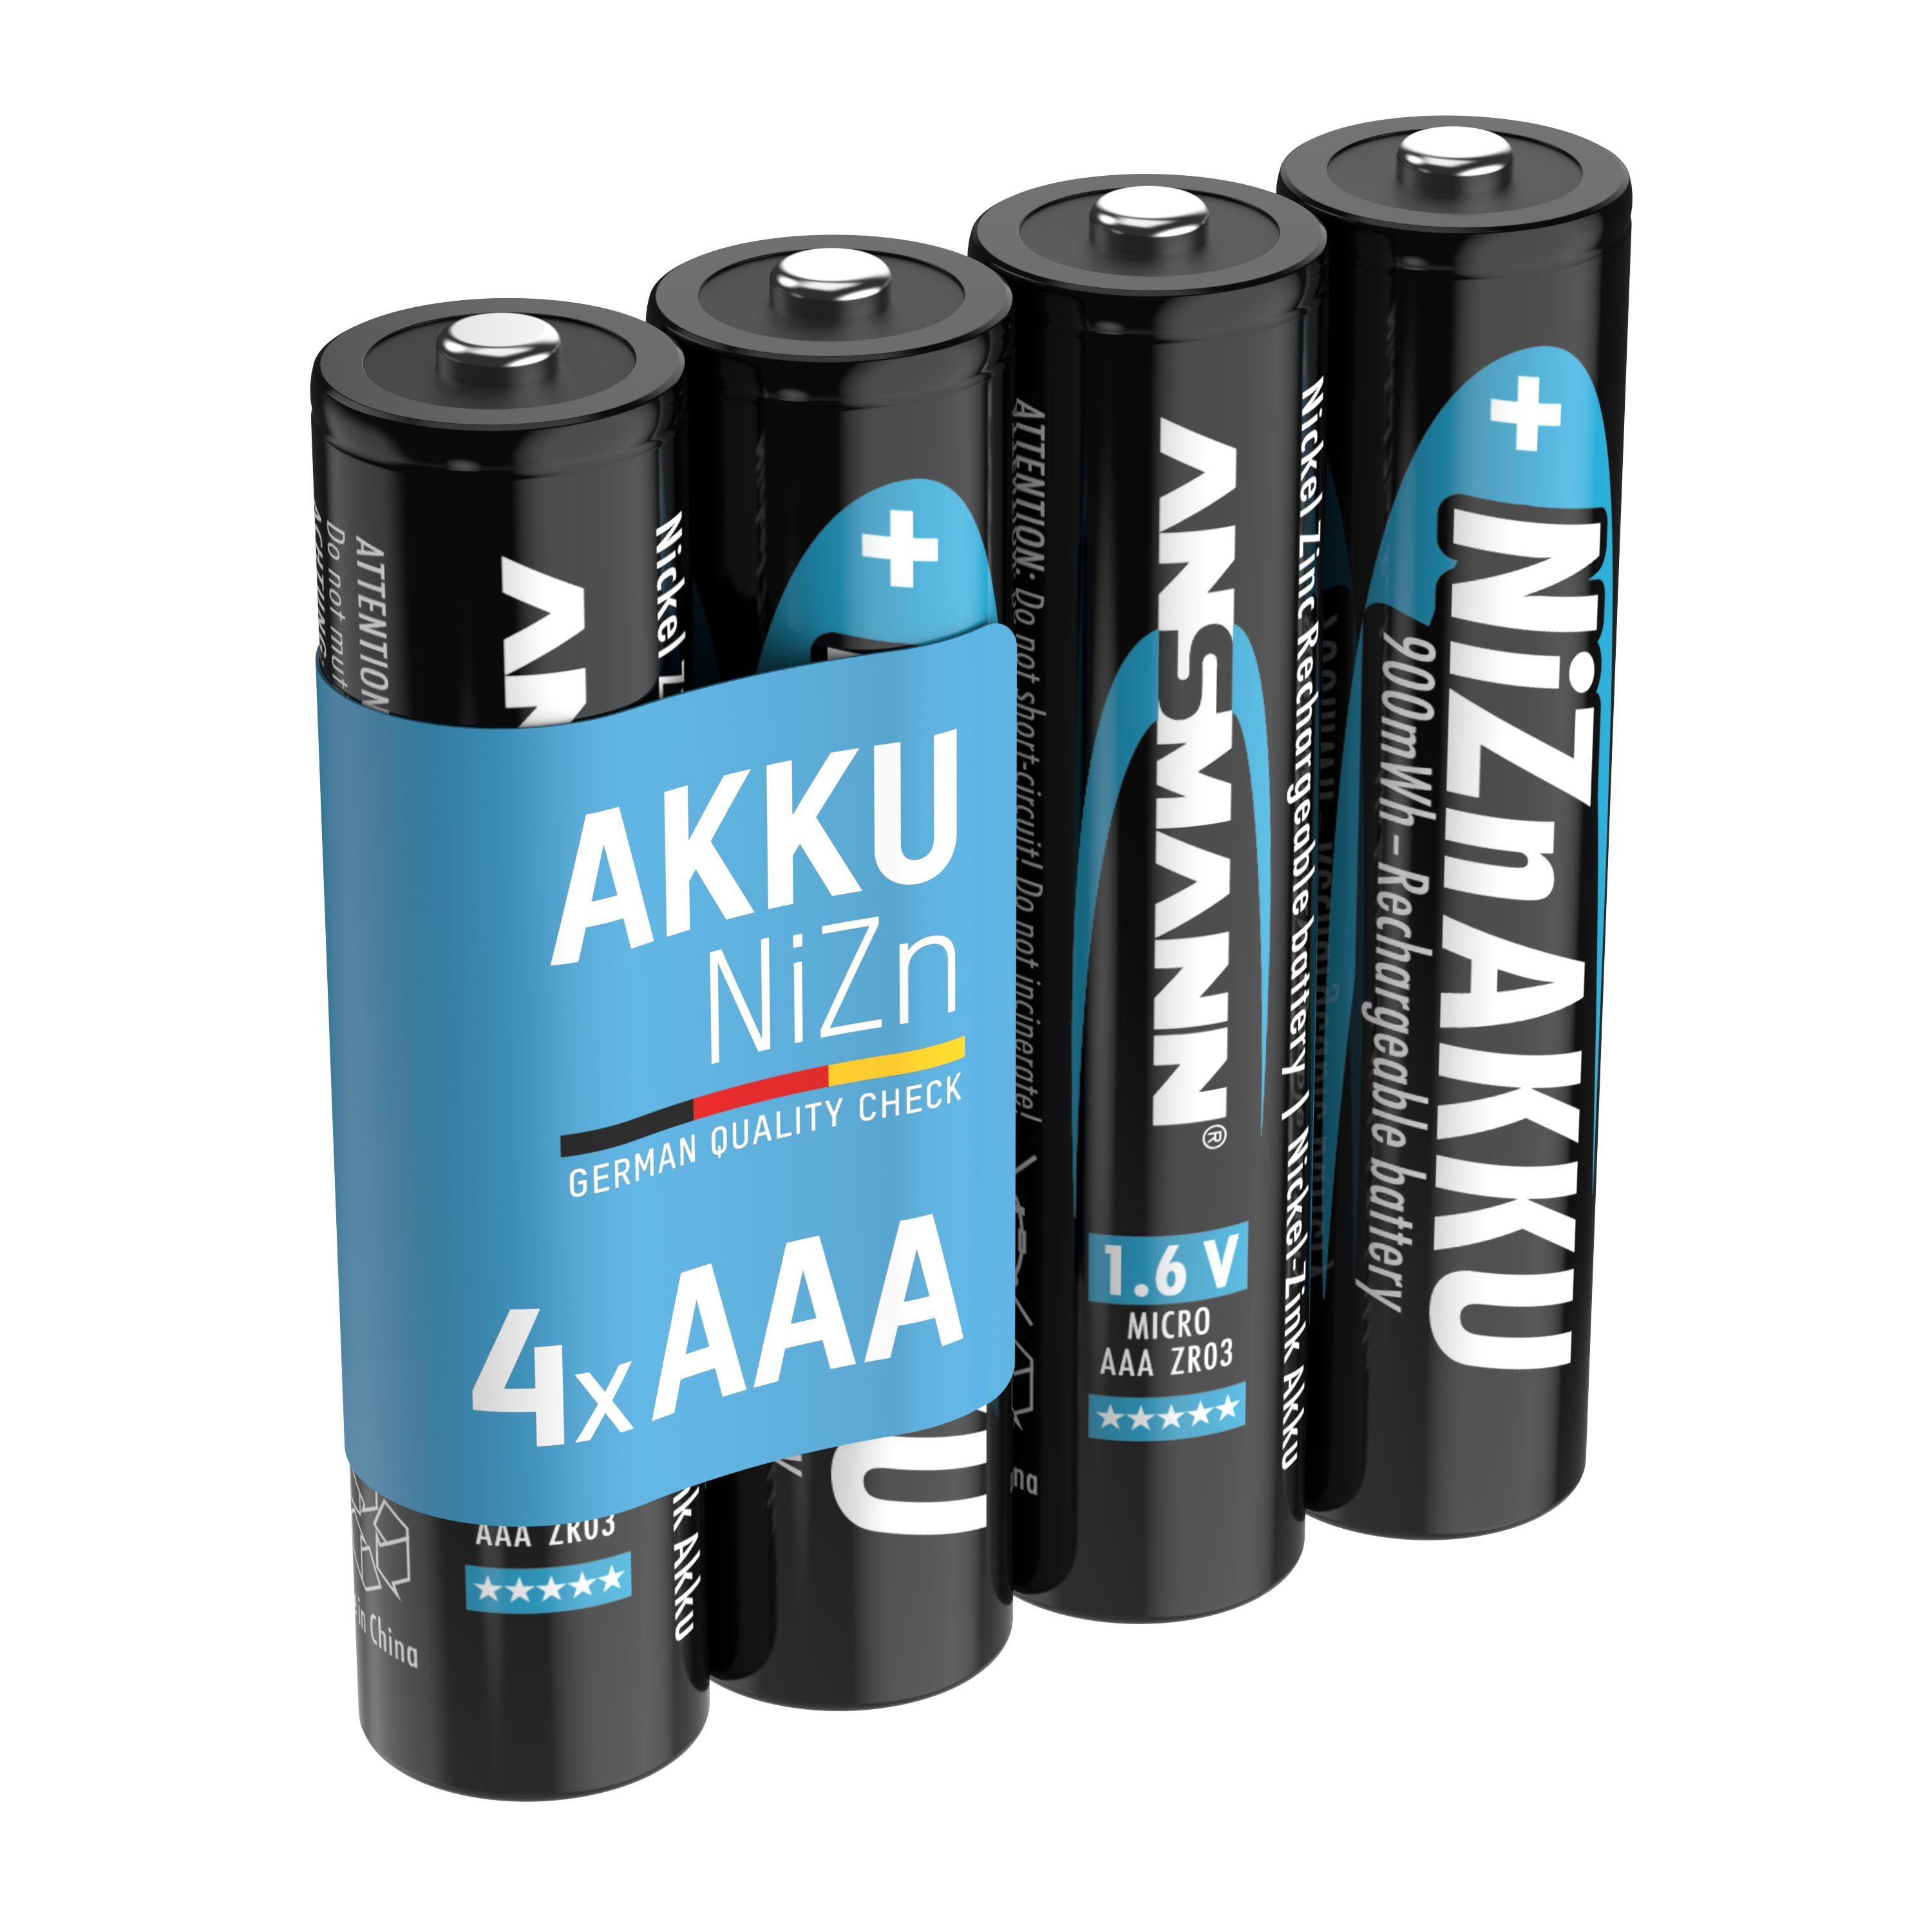 ANSMANN® Micro NiZn Akku AAA 1,6V 550mWh, wiederaufladbare Batterien - 4 Stück Akku 550 mAh (1.6 V) | Akkus und PowerBanks